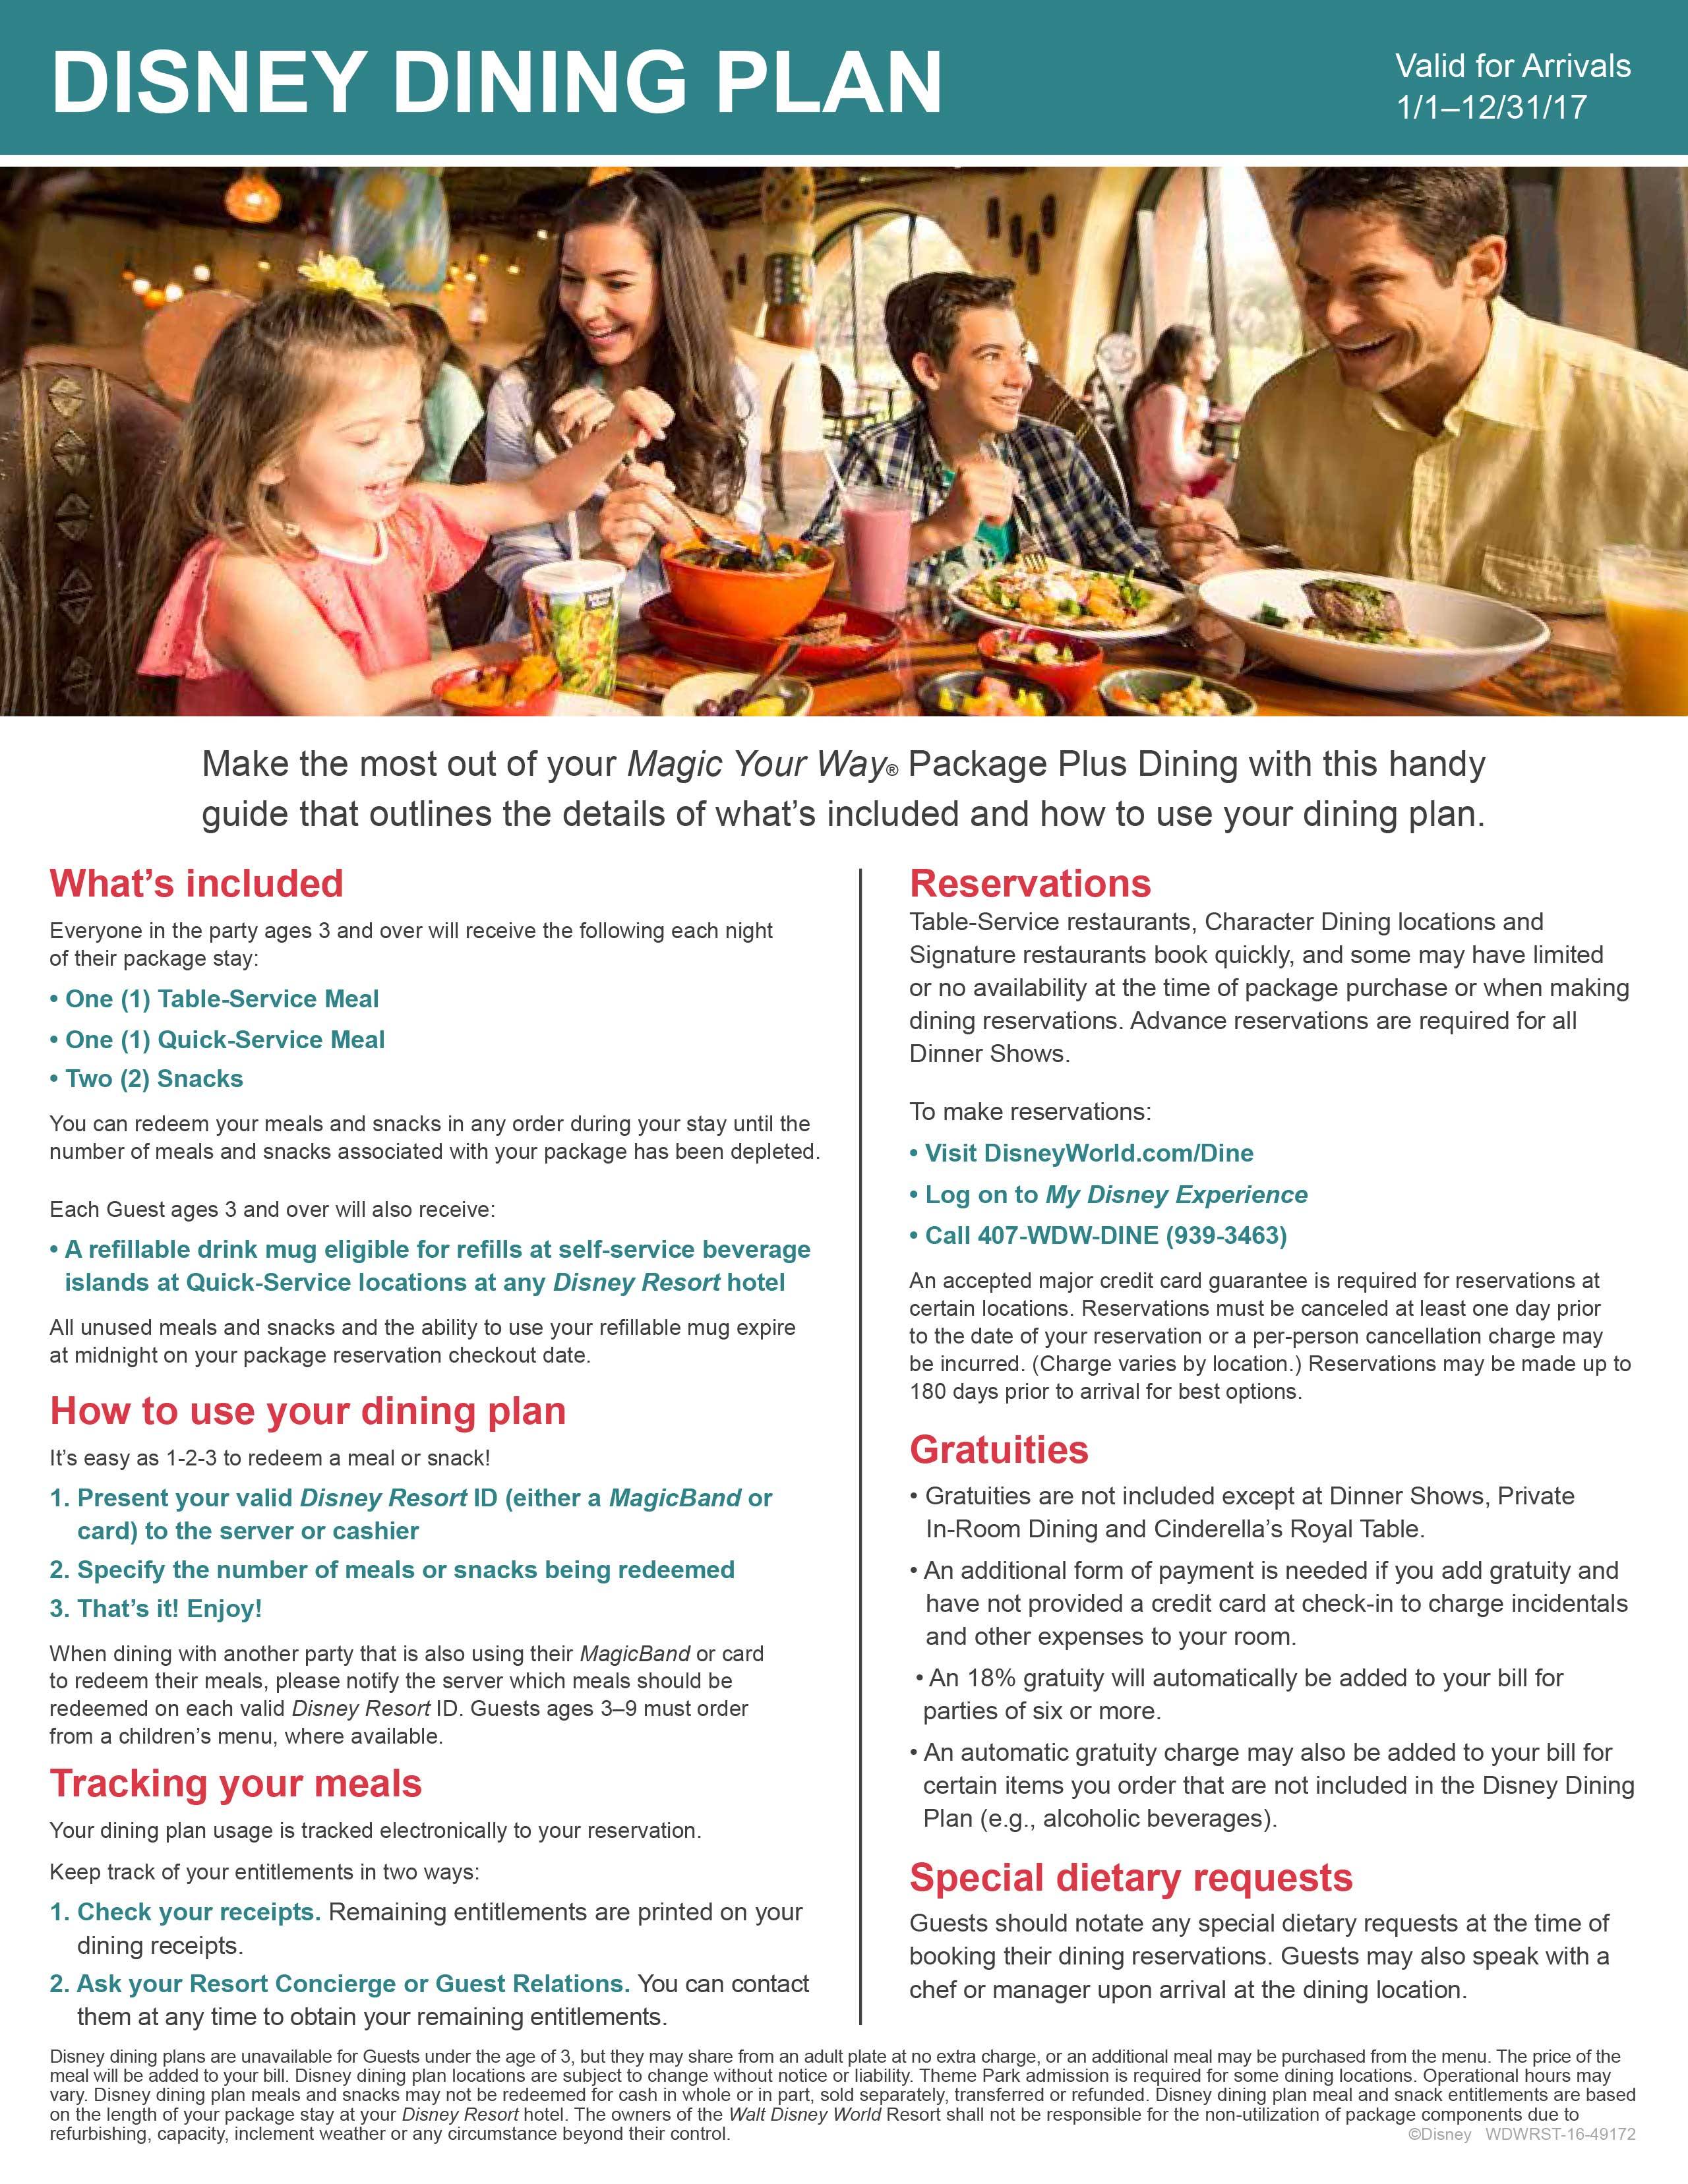 2017 Disney Dining Plan brochure - Page 1